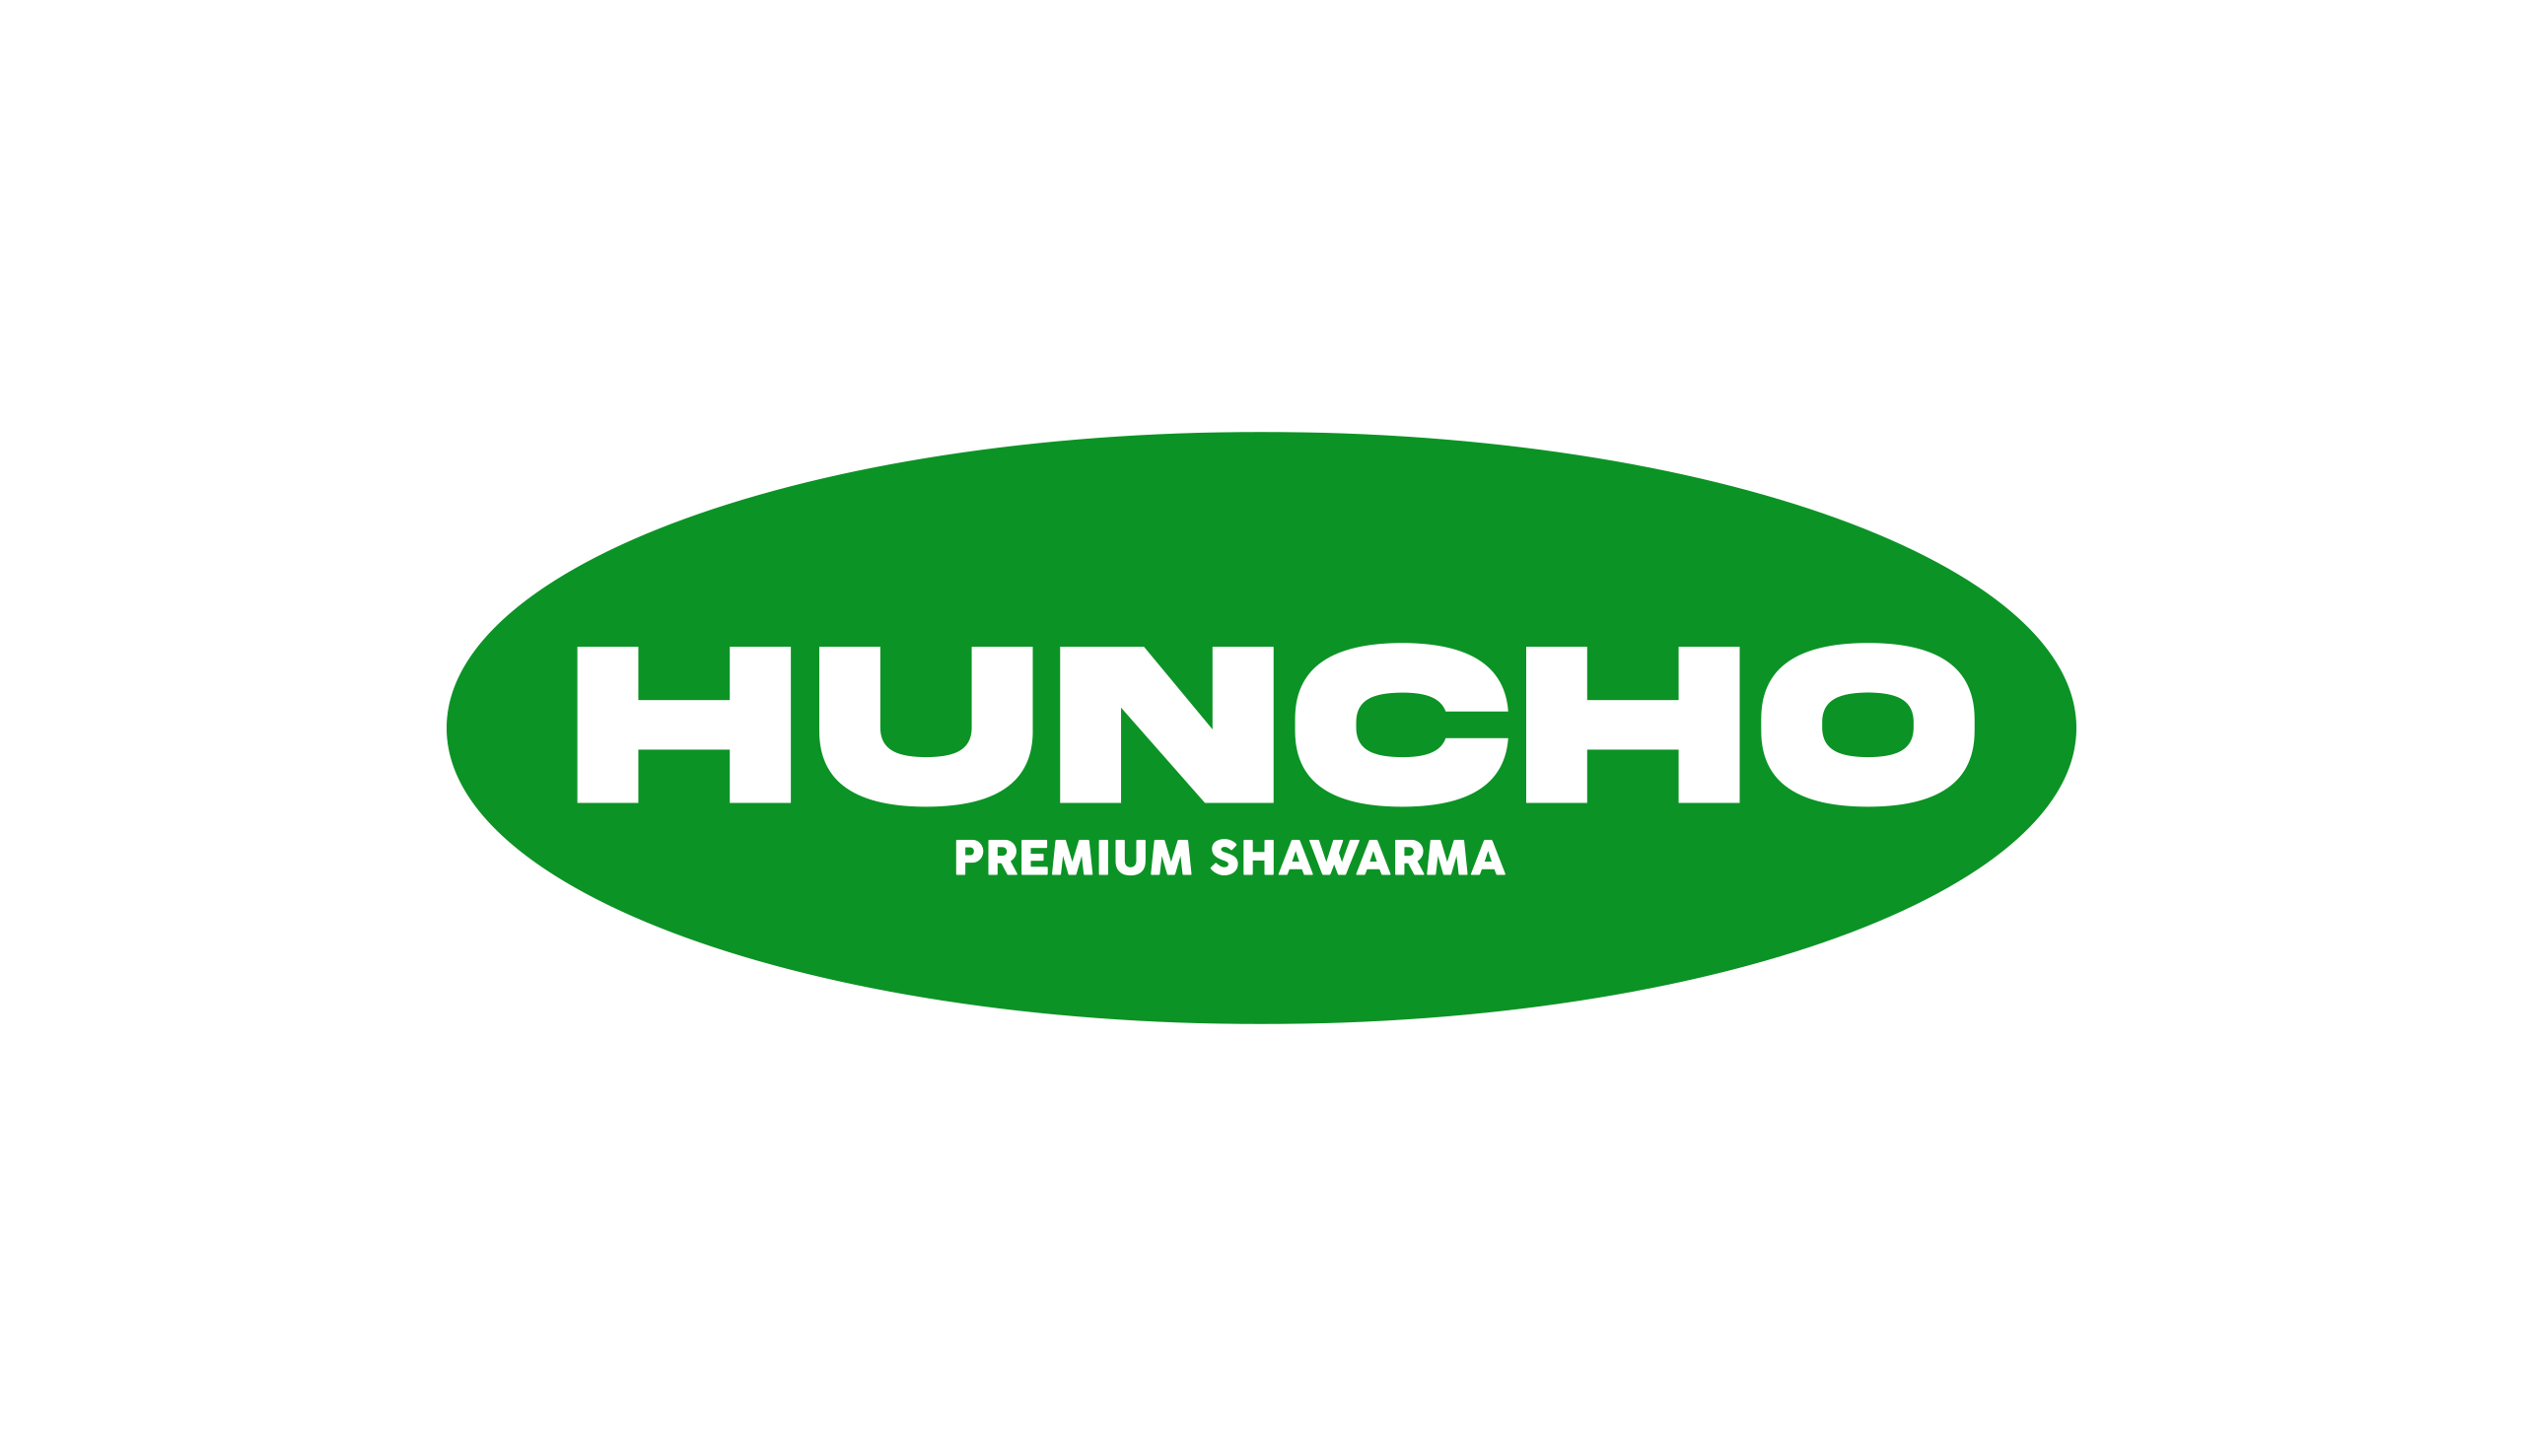 Huncho